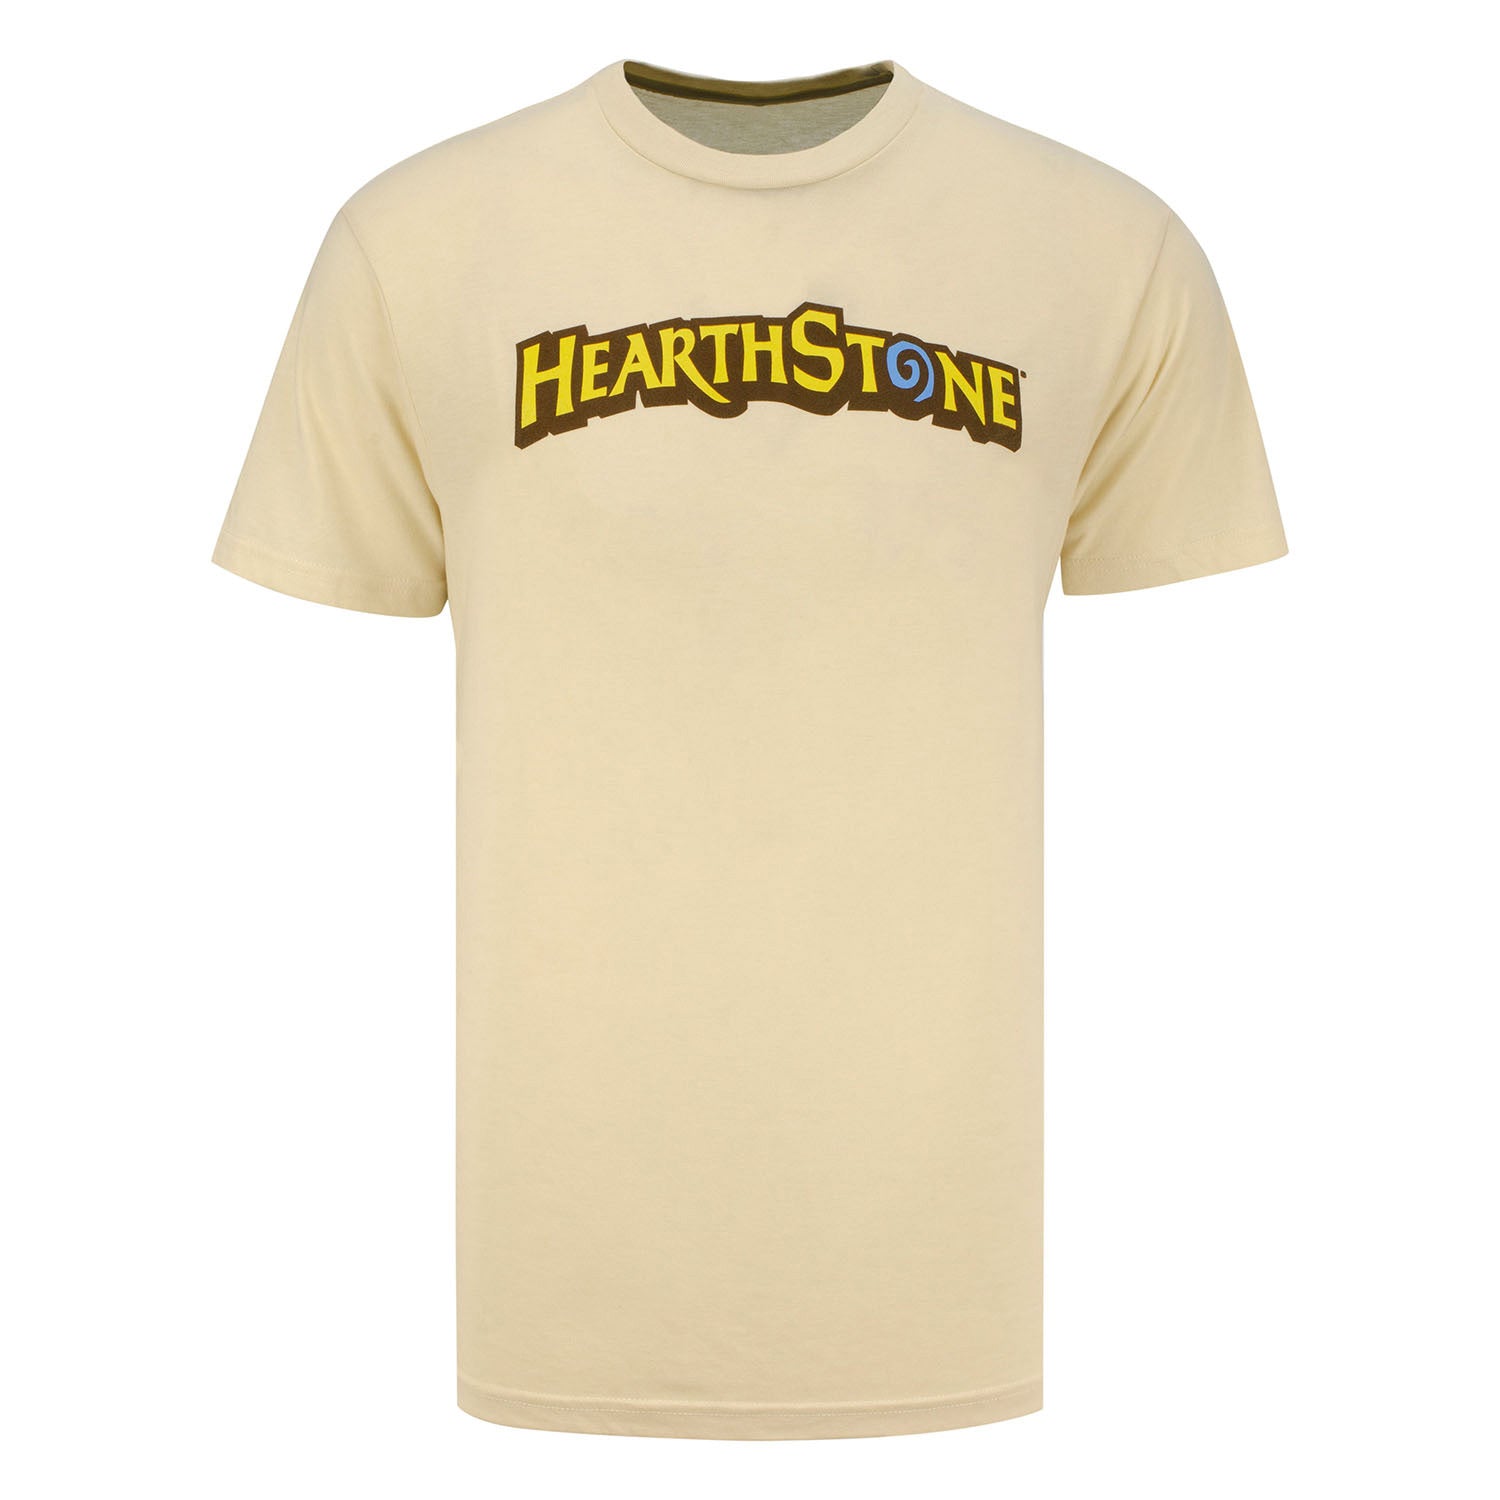 Hearthstone Bone T-Shirt - Front View